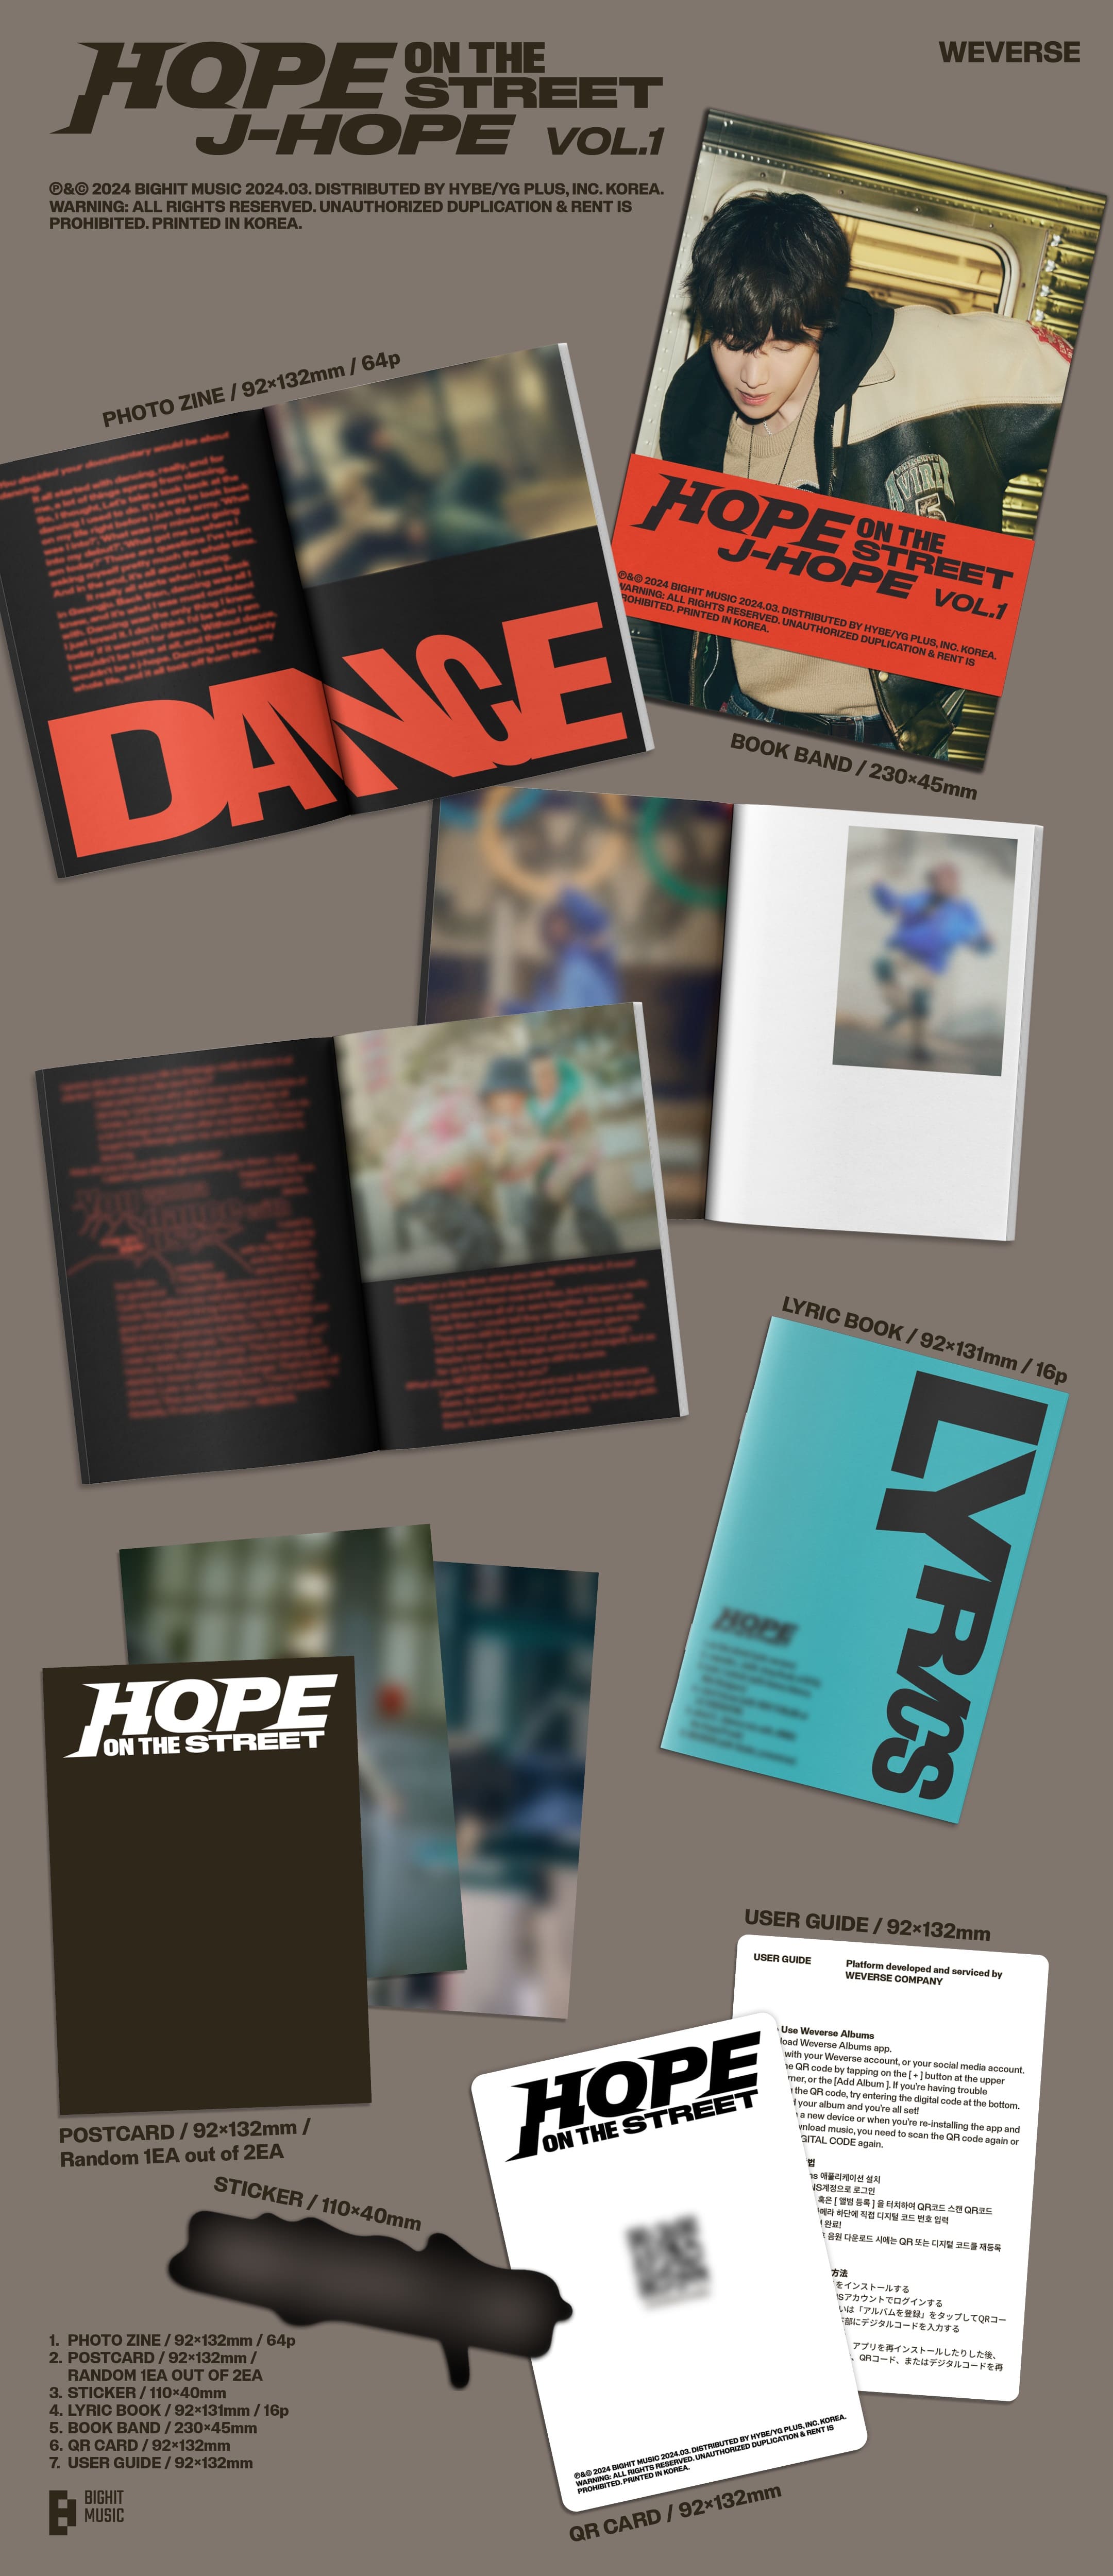 J-HOPE (BTS) HOPE ON THE STREET VOL.1 (Weverse Albums Version)